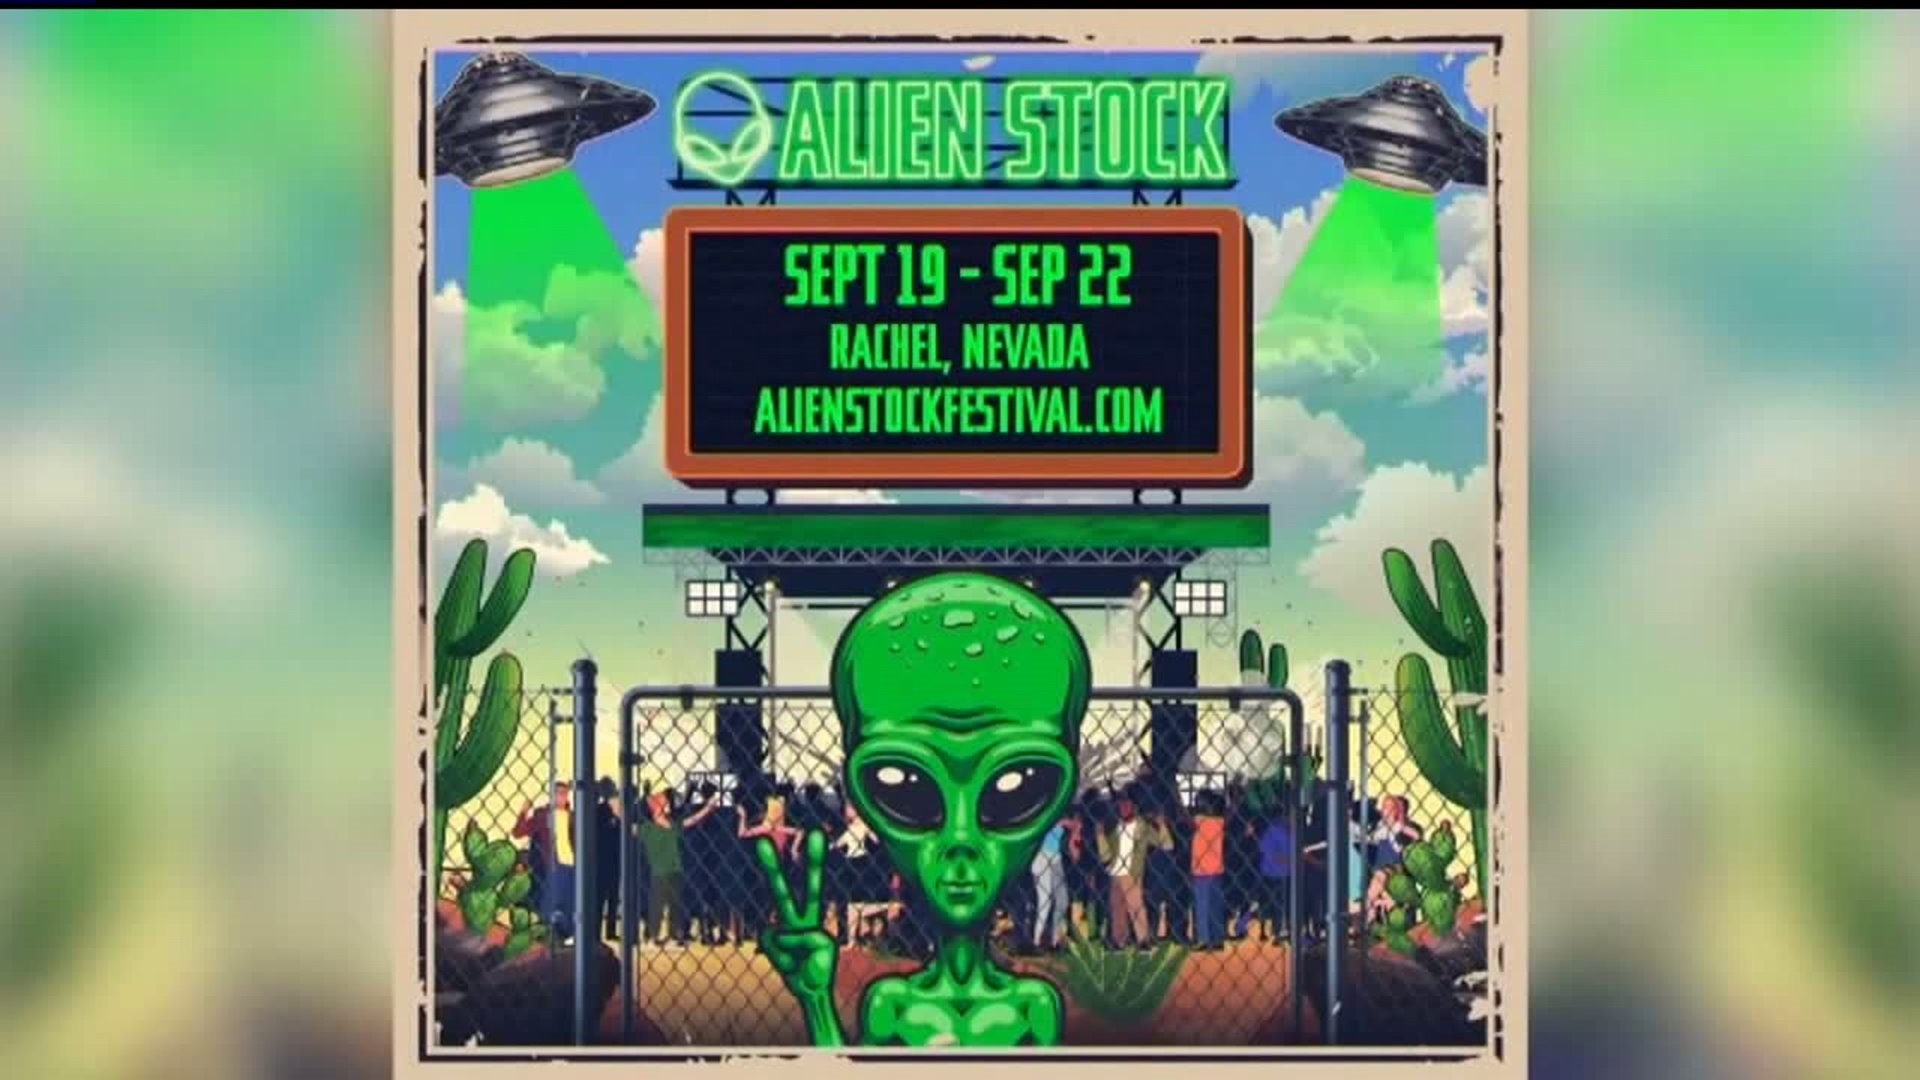 Alienstock music festival at Area 51